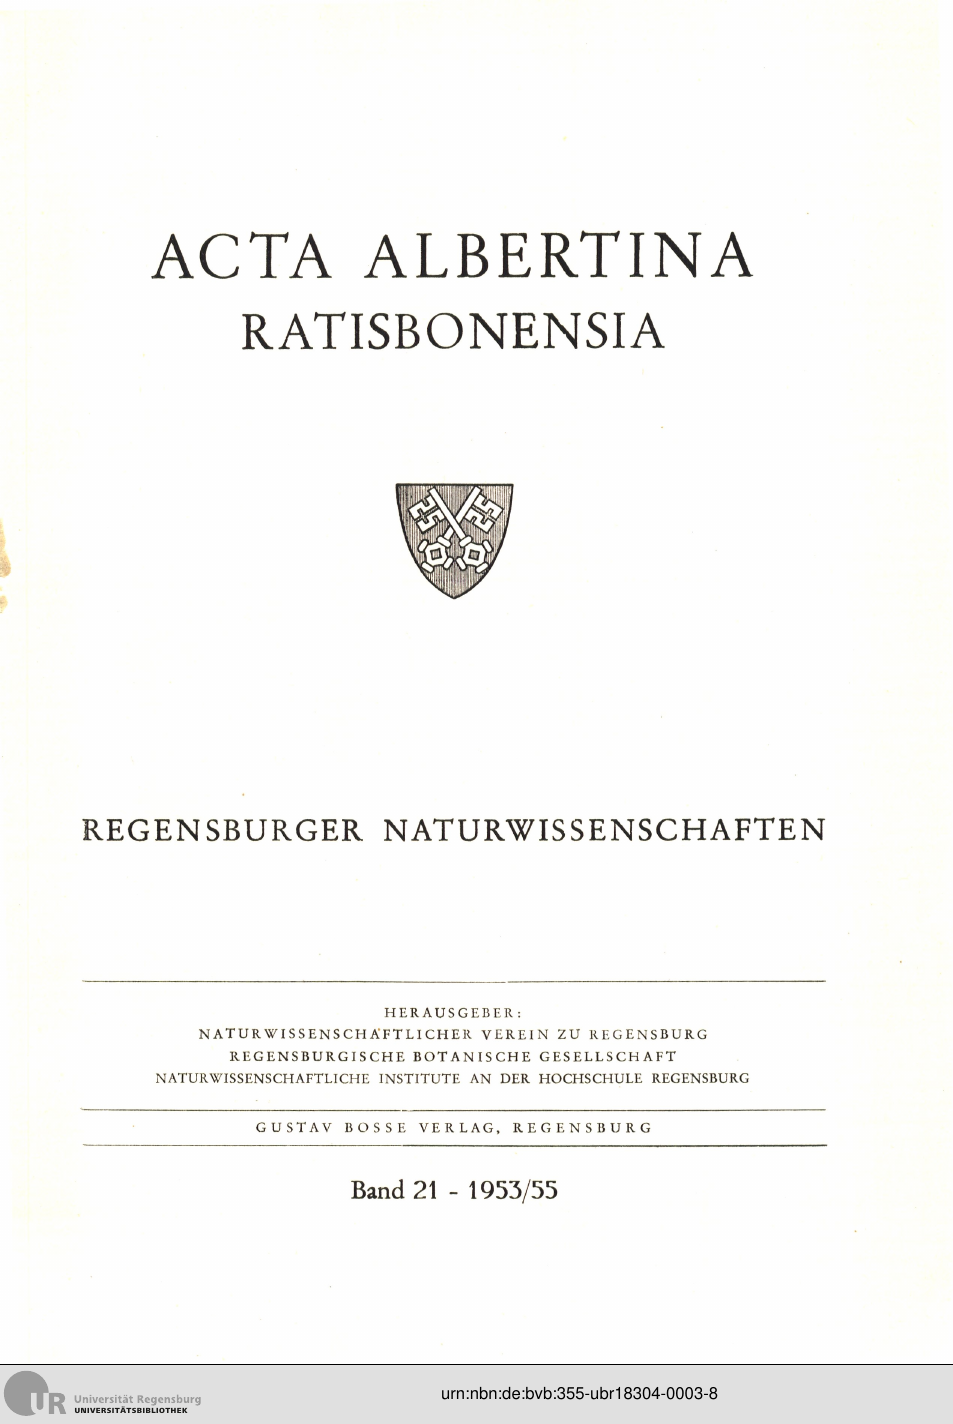 					Ansehen Bd. 21 (1955): Acta Albertina Ratisbonensia
				